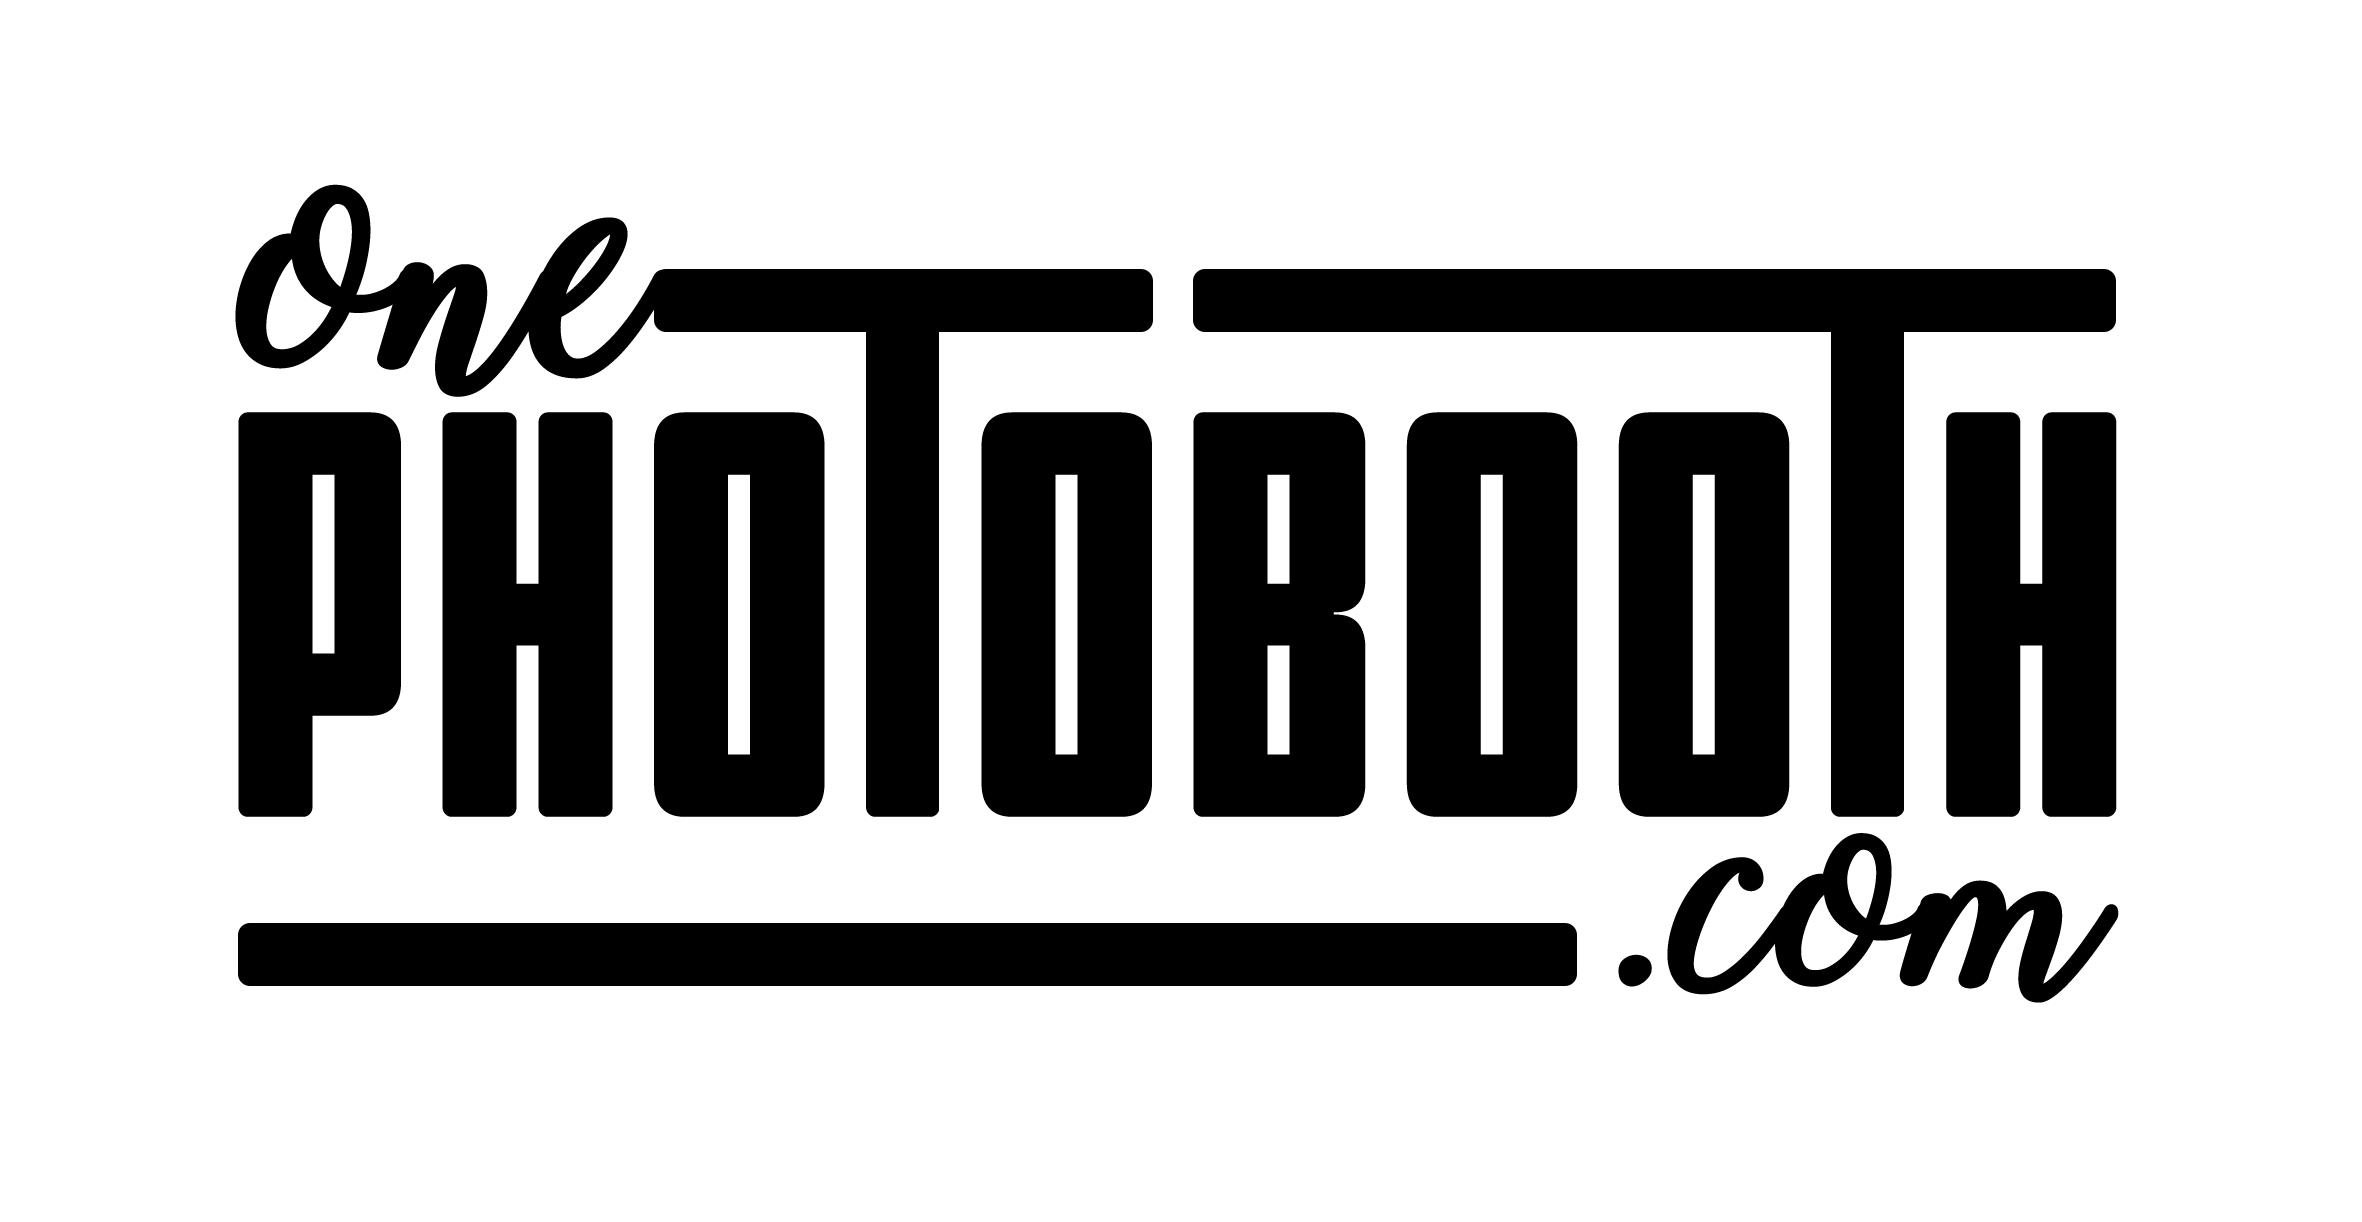 one photobooth logo